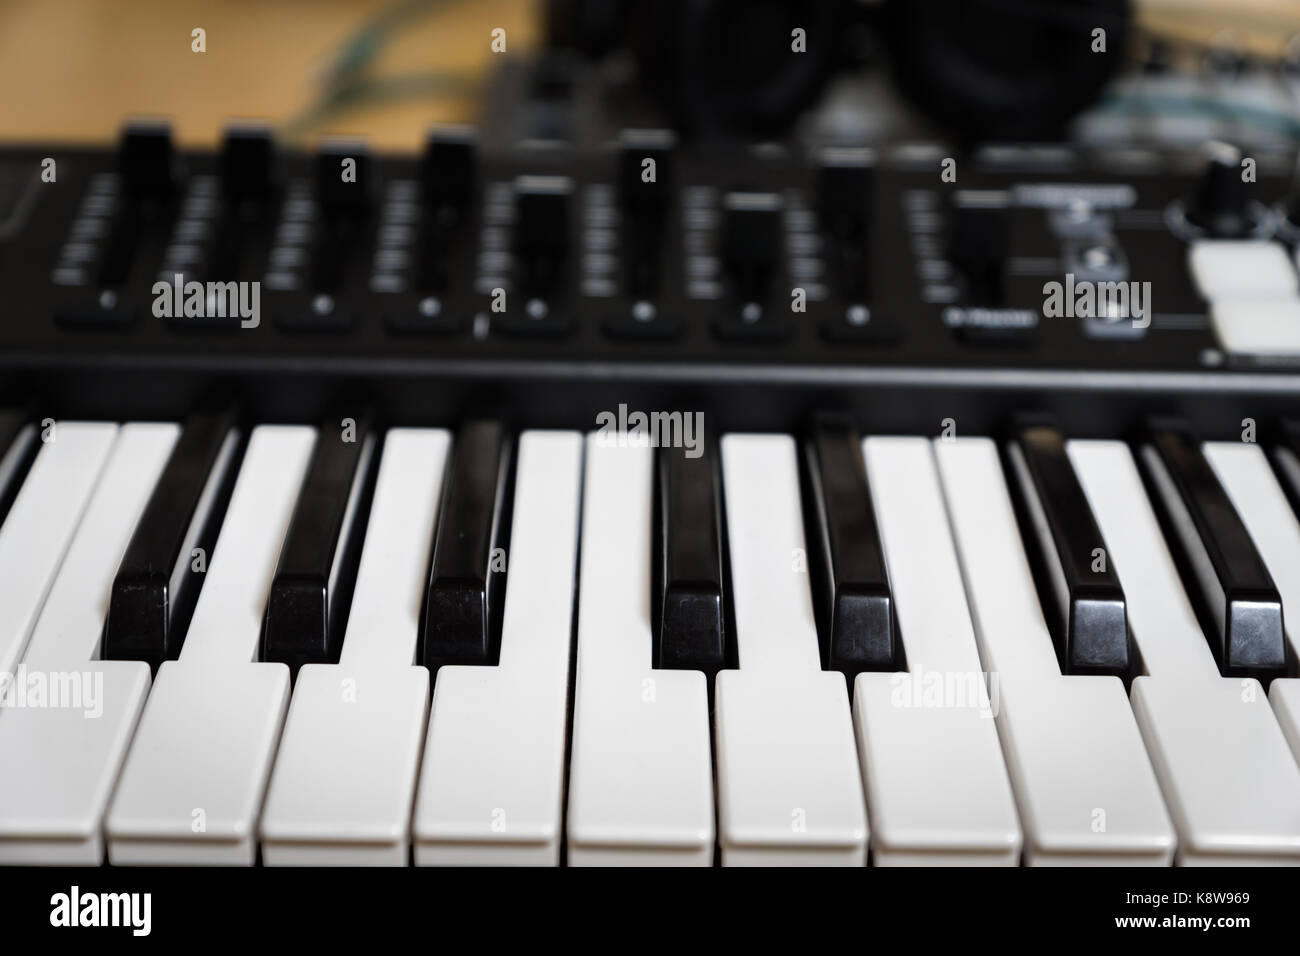 MIDI keyboard synthesizer piano keys closeup for electronic music production / recording Stock Photo